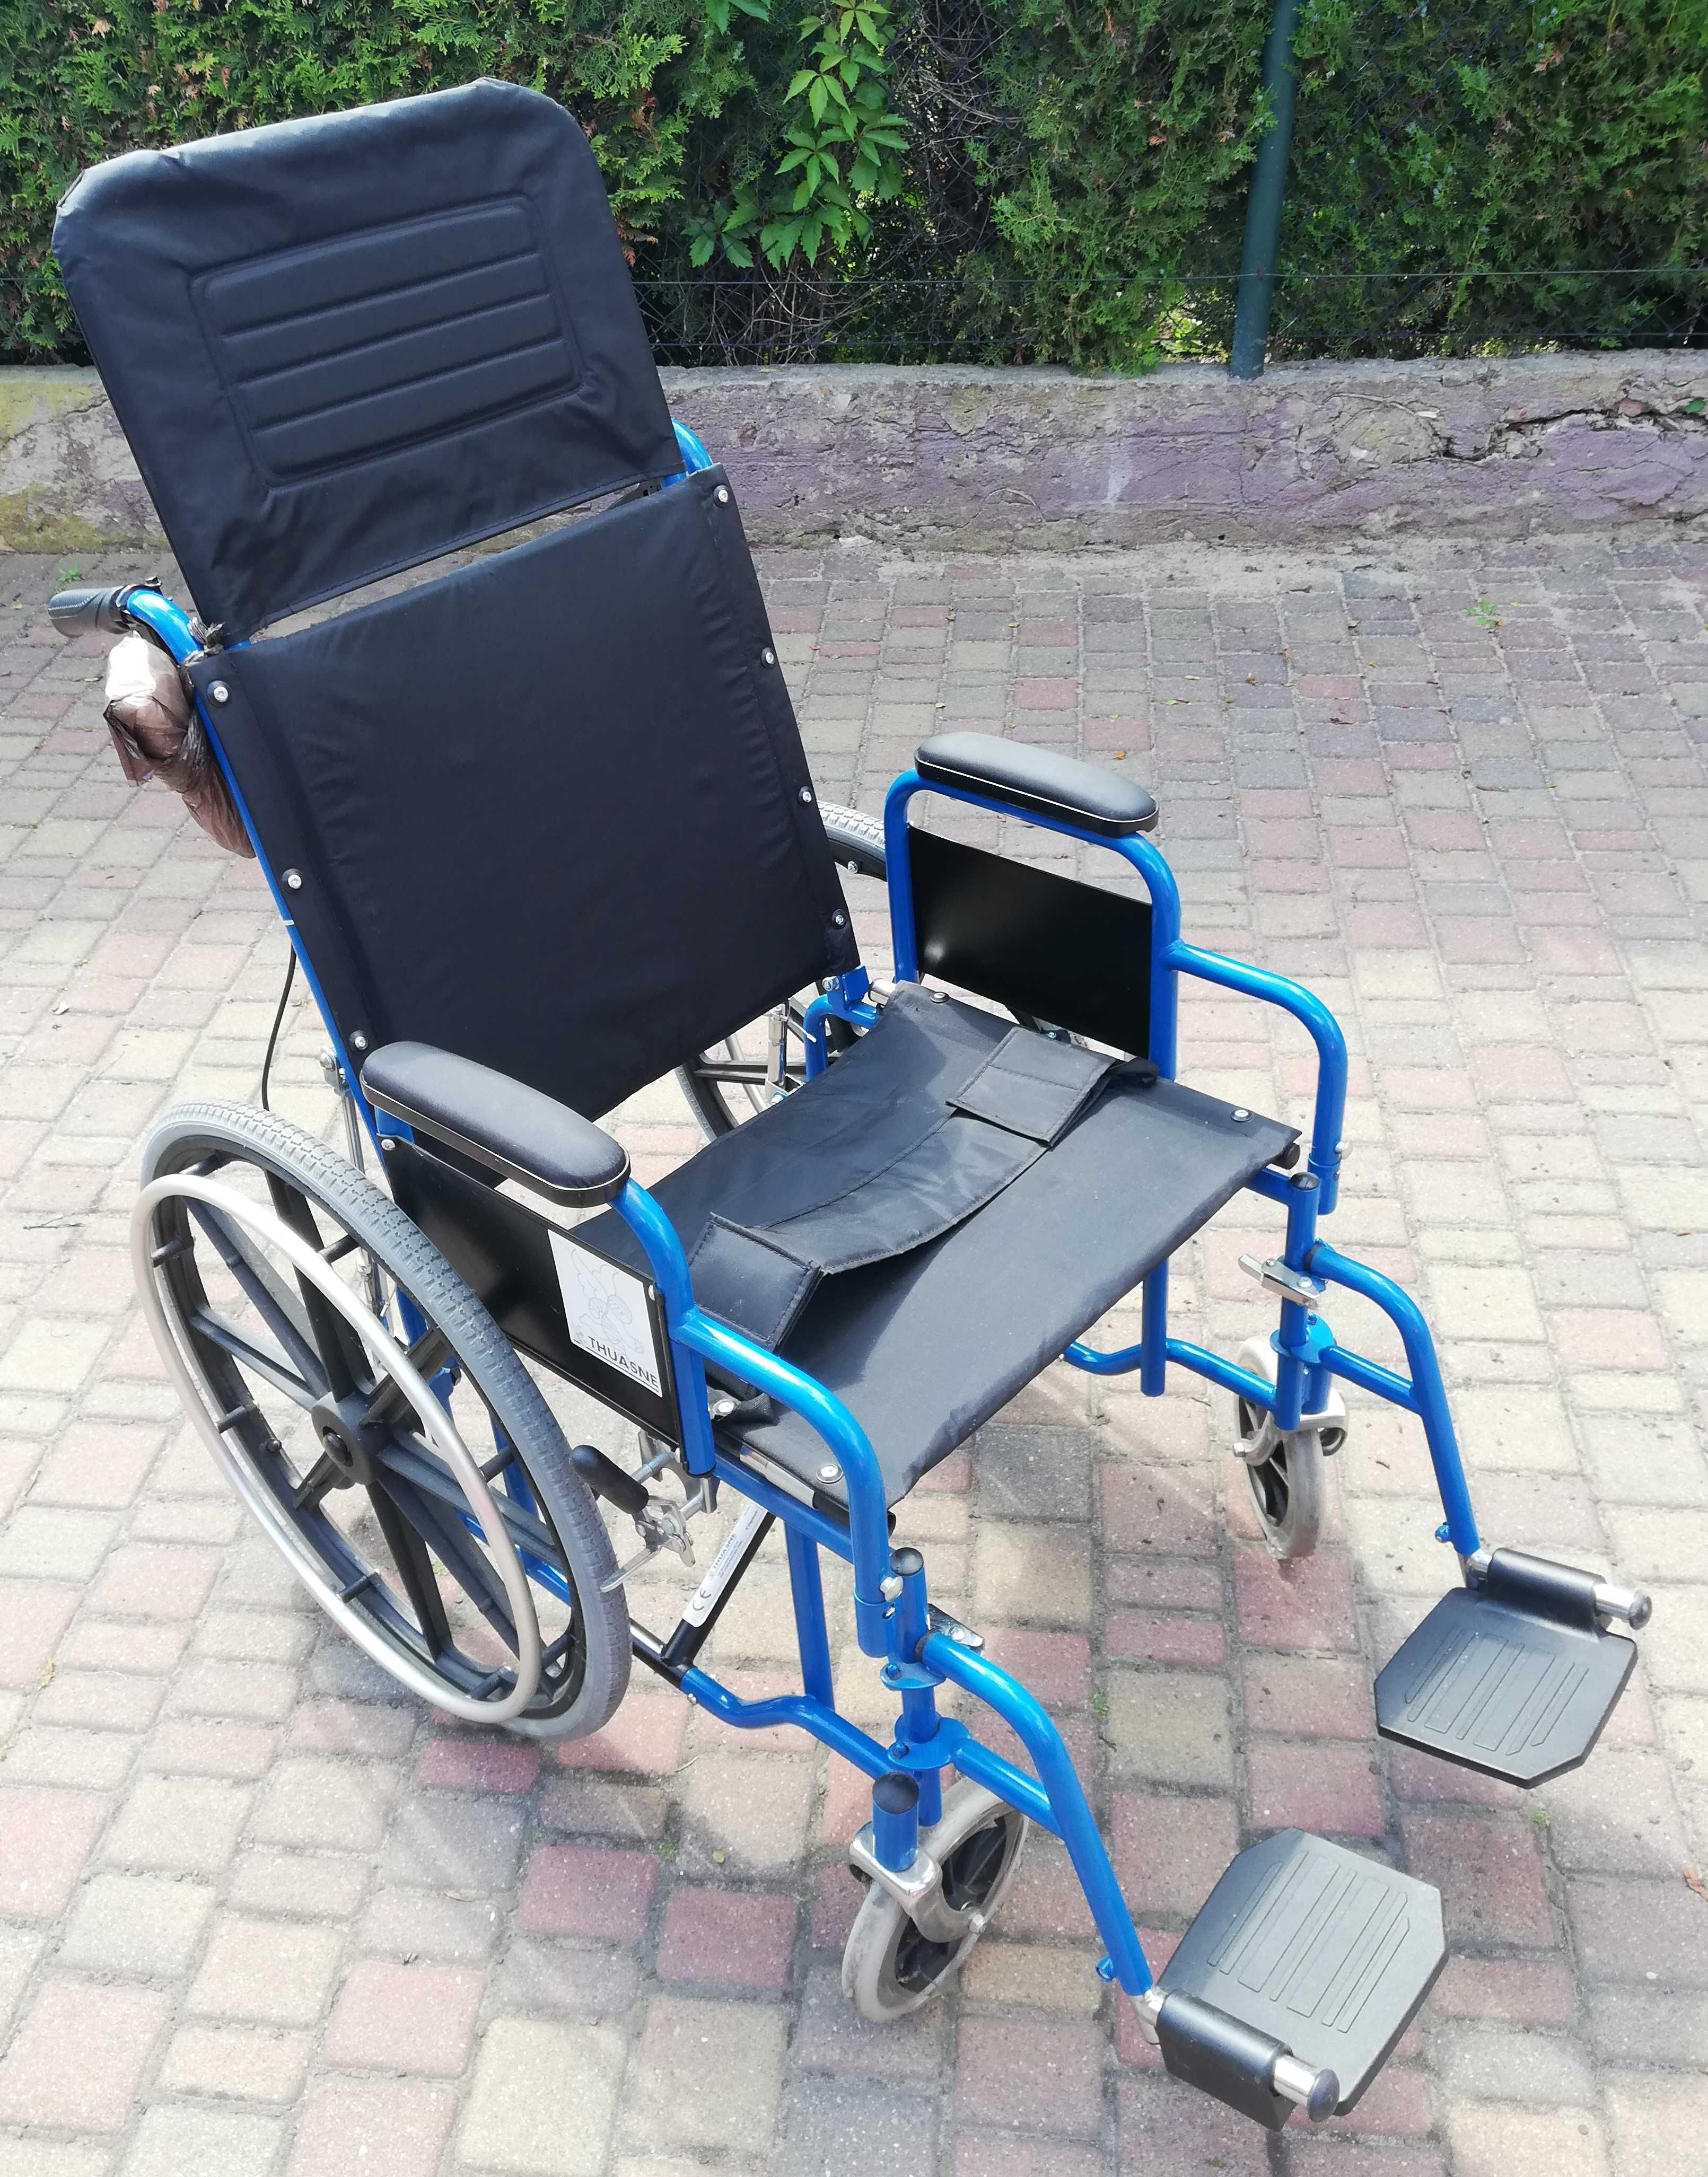 Wózek inwalidzki Thuasne